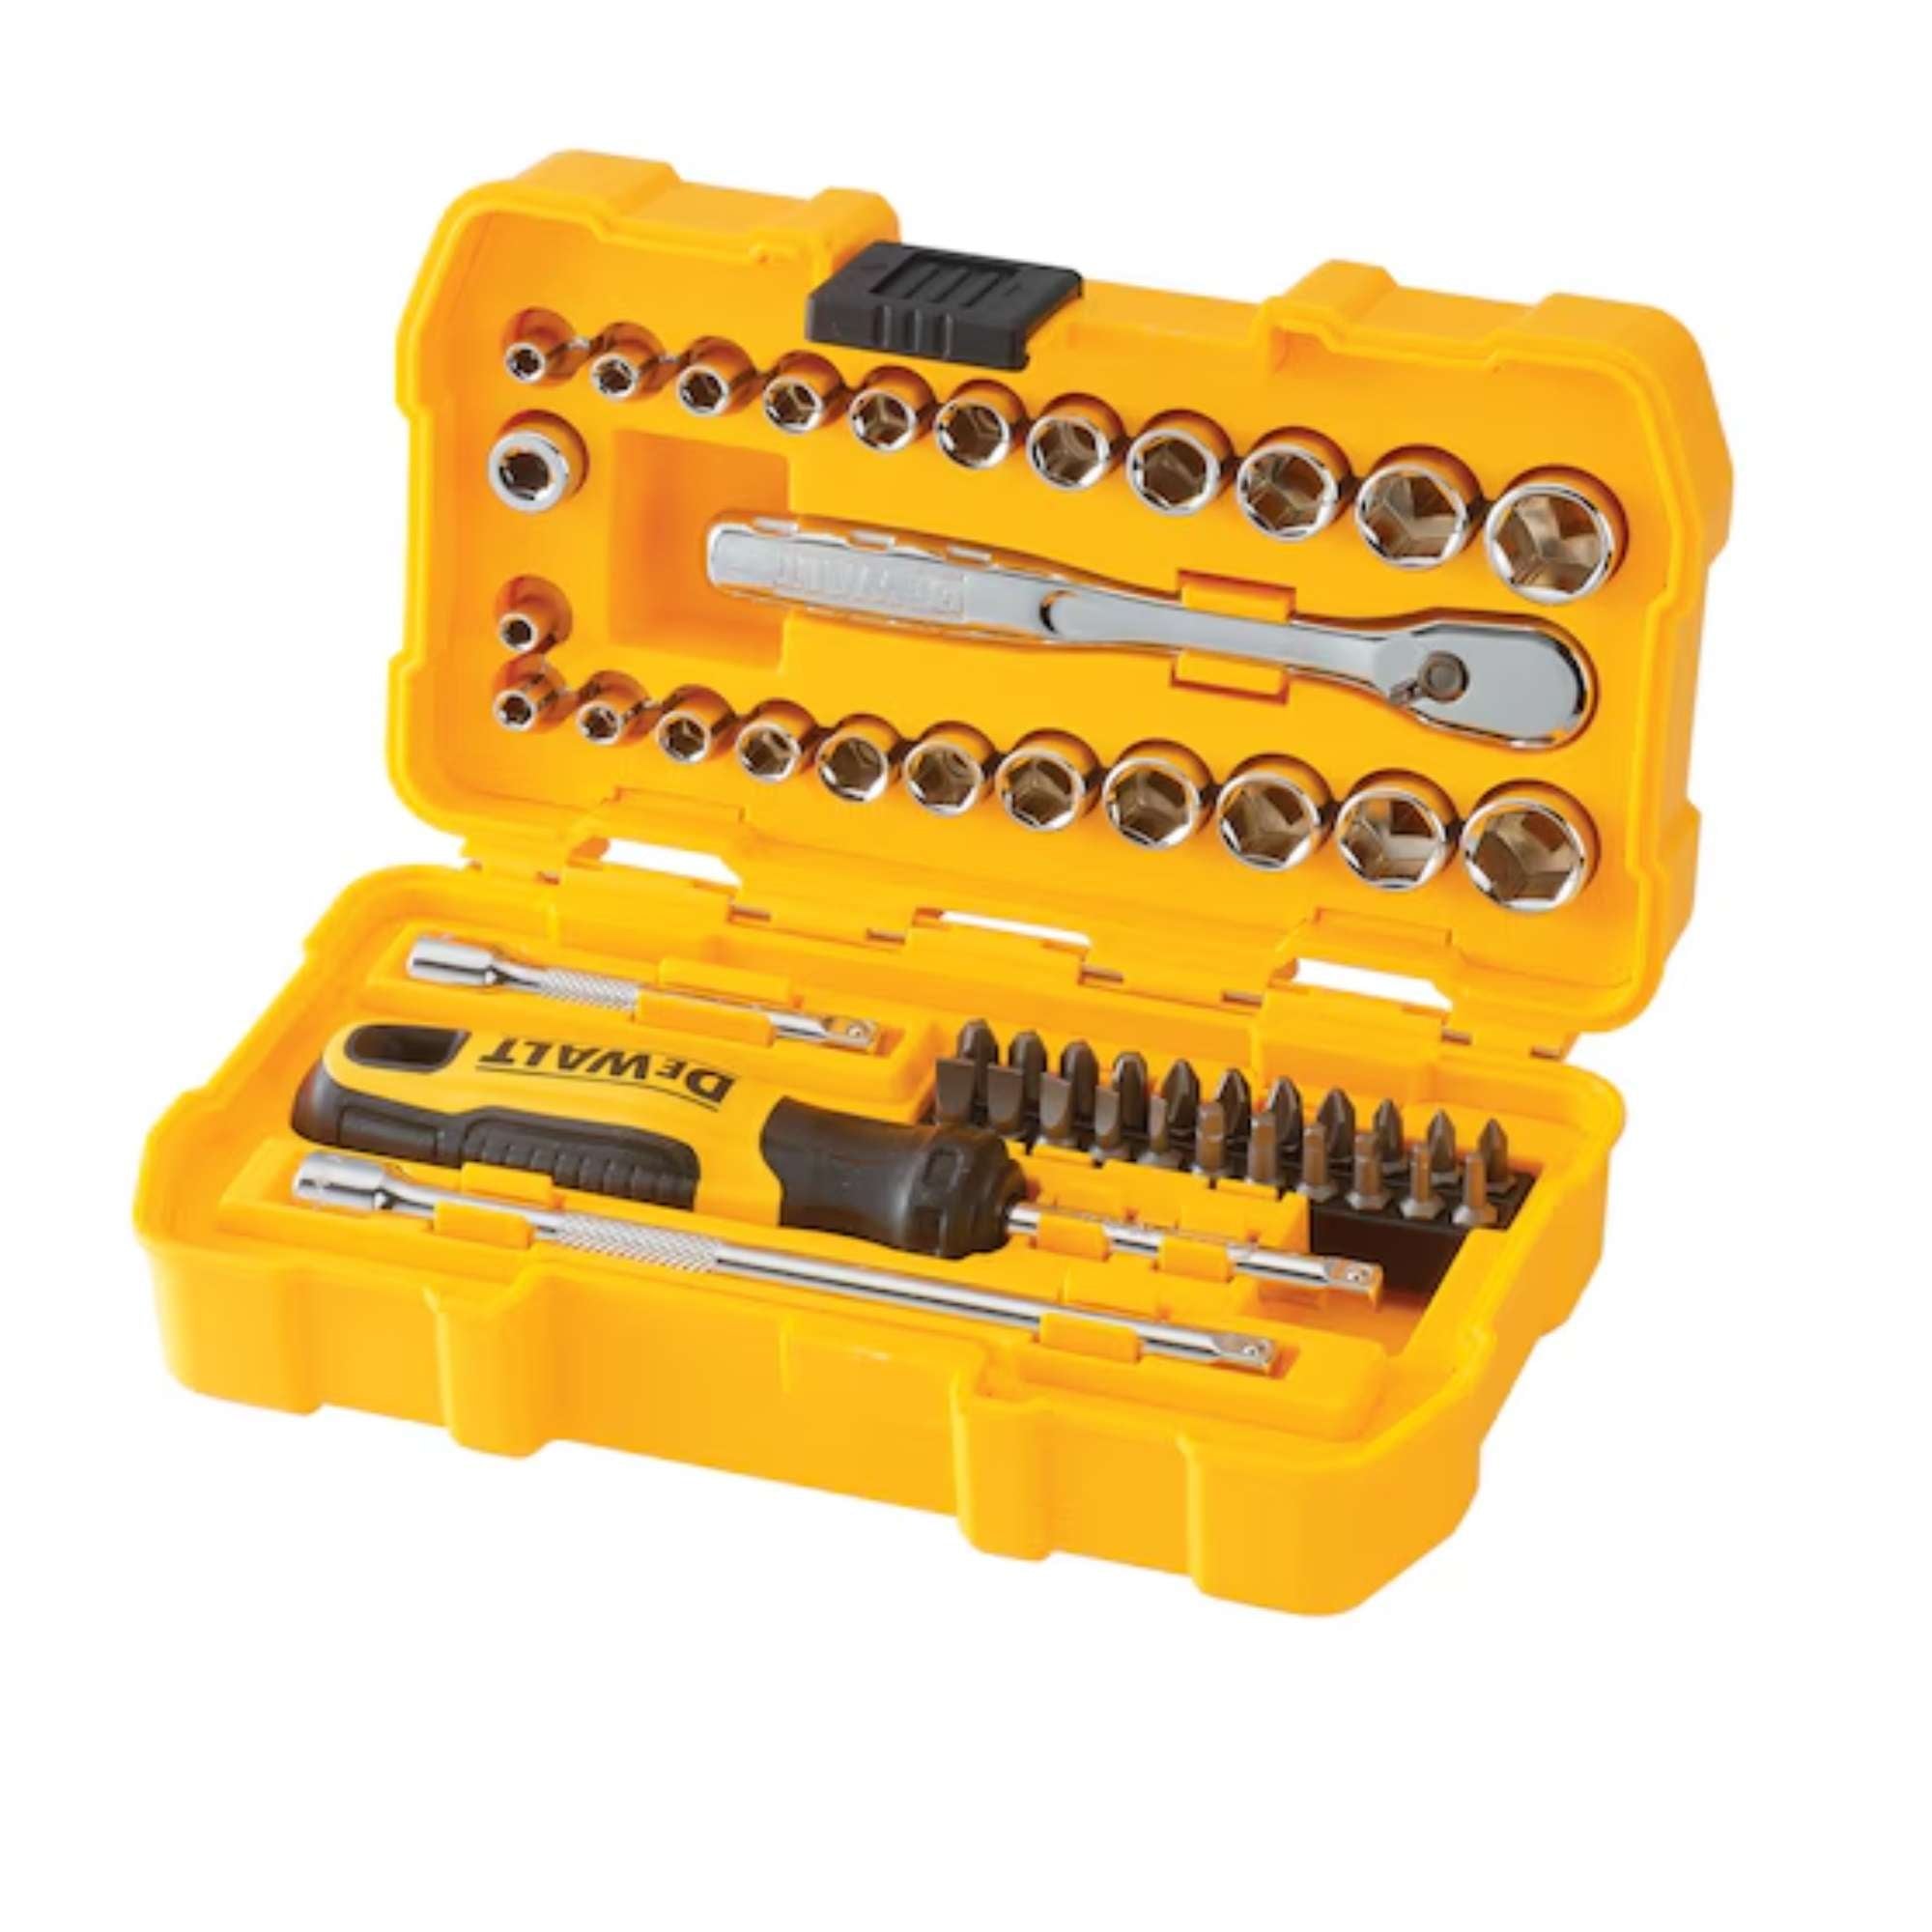 50pcs compact socket wrench set 1/4" socket - Dewalt DWMT816100